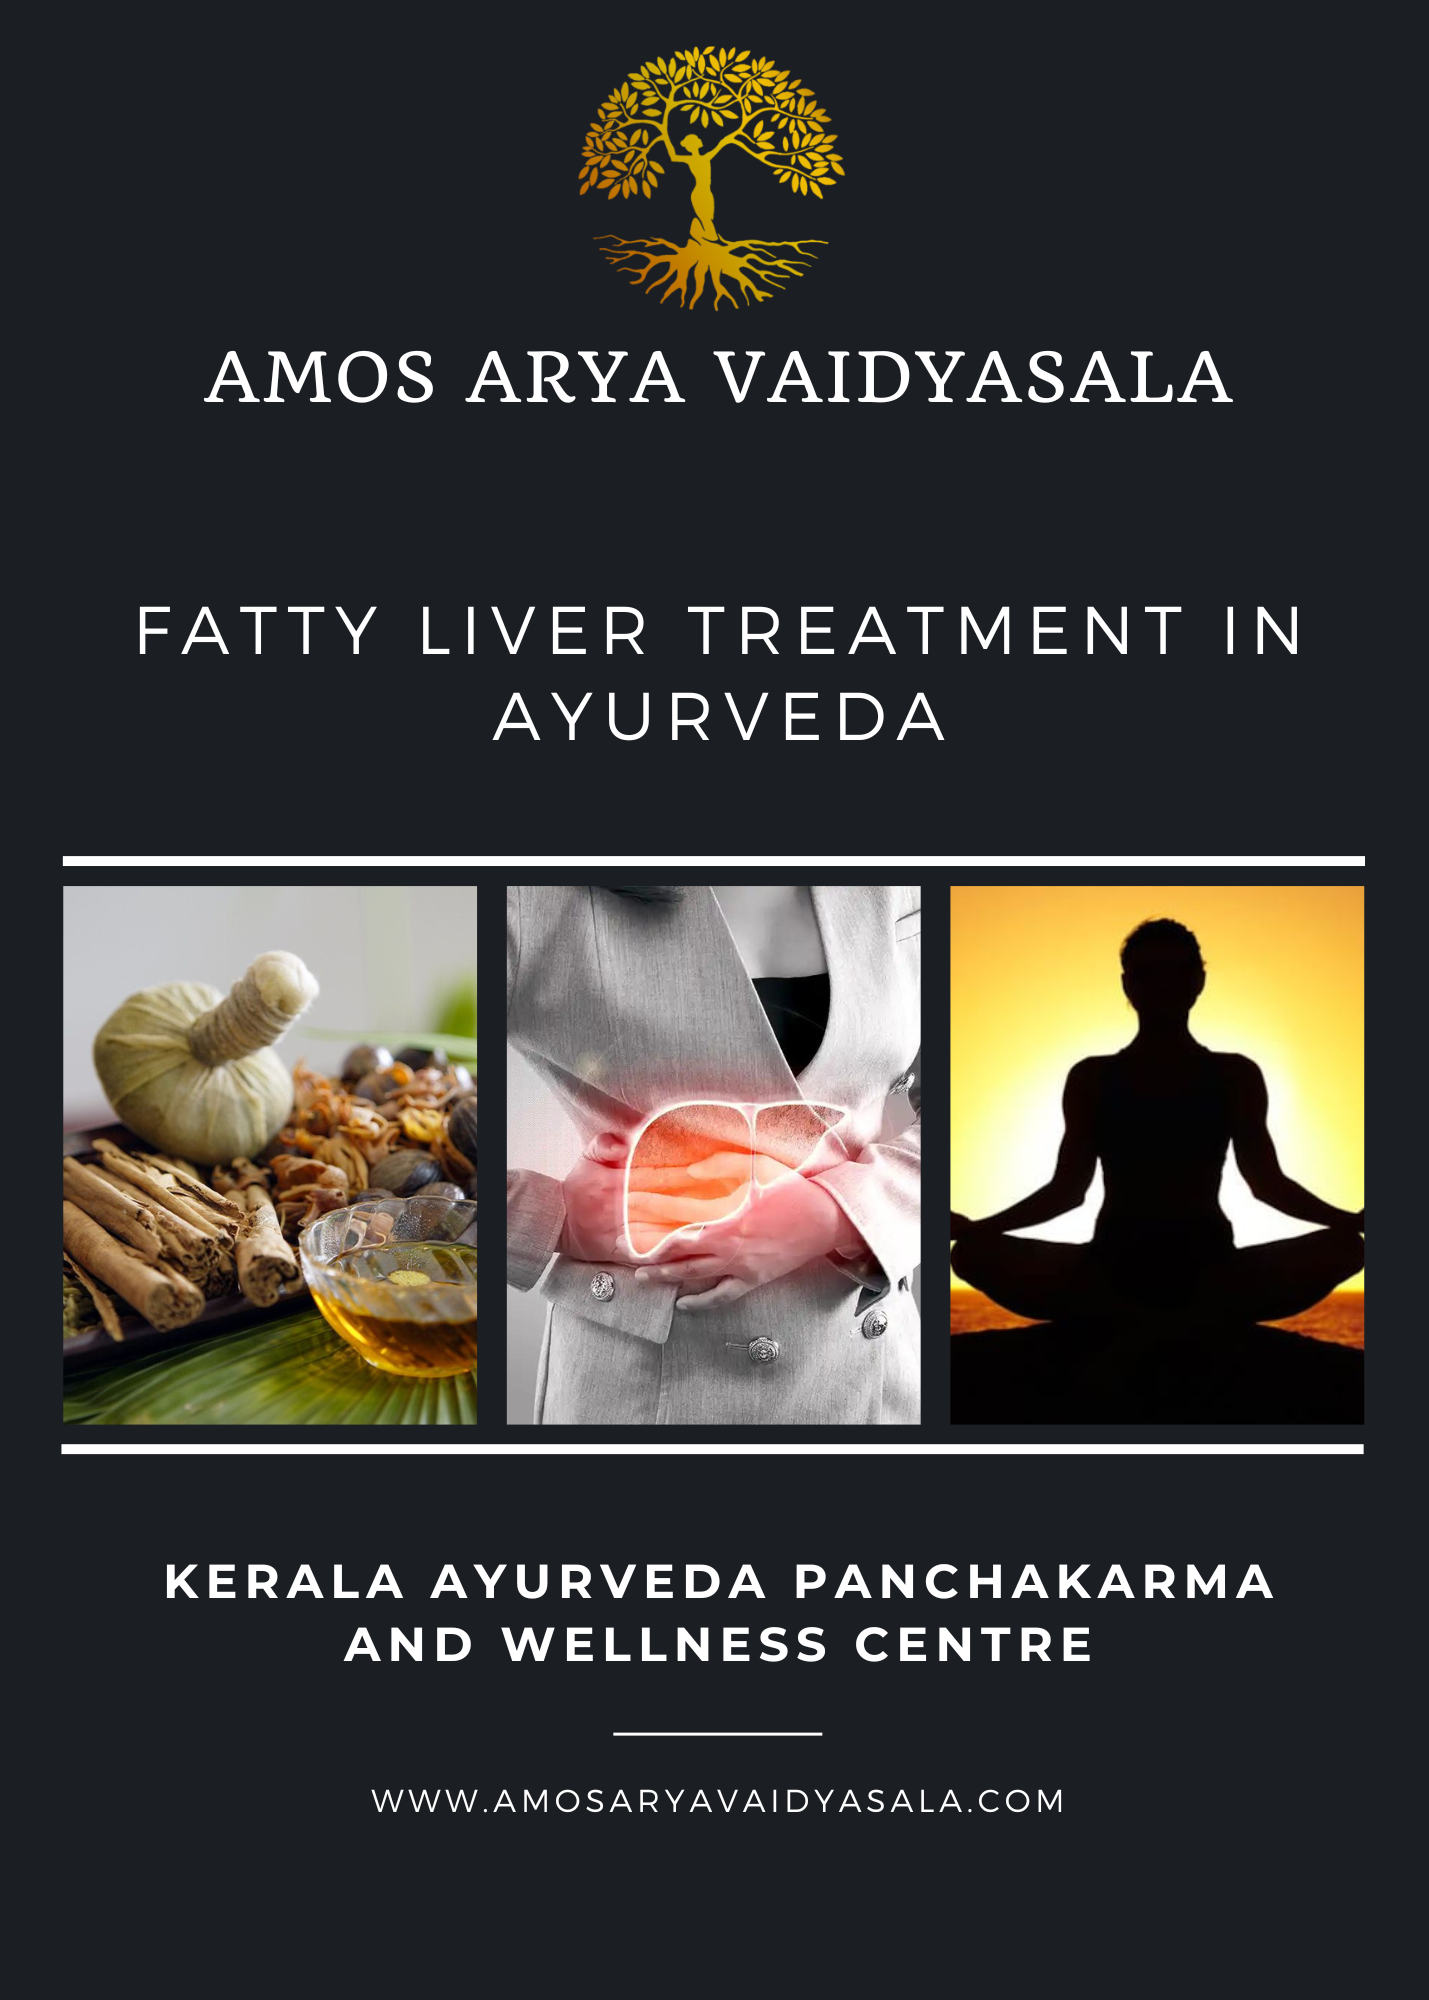 Fatty liver treatment in ayurveda 